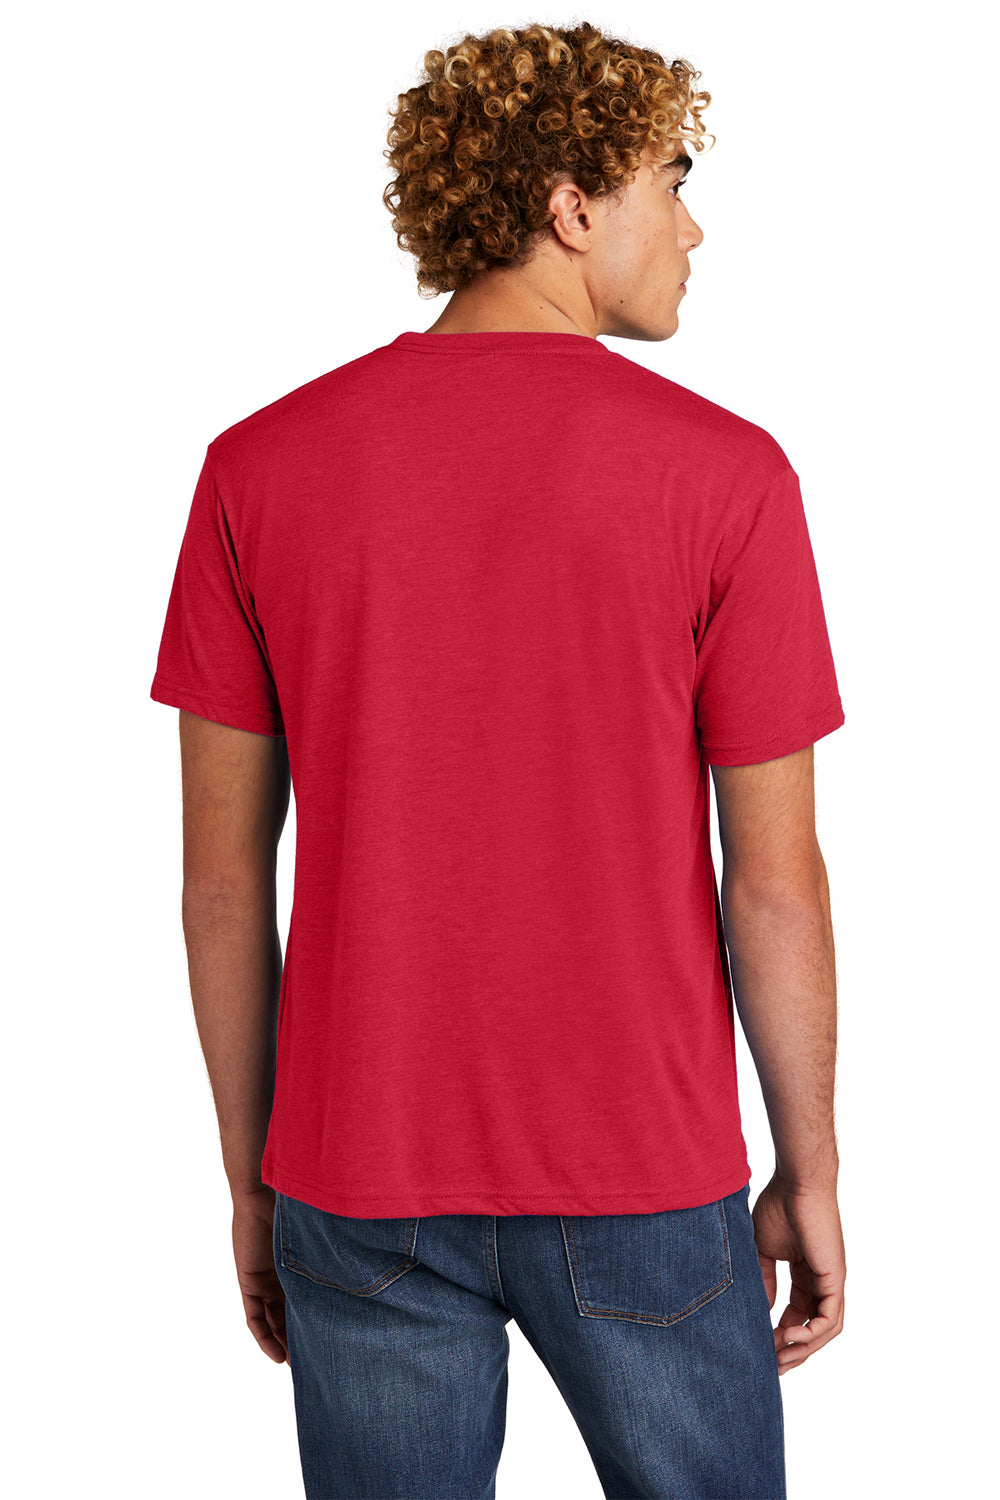 Next Level Mens Jersey Short Sleeve Crewneck T-Shirt Red Back